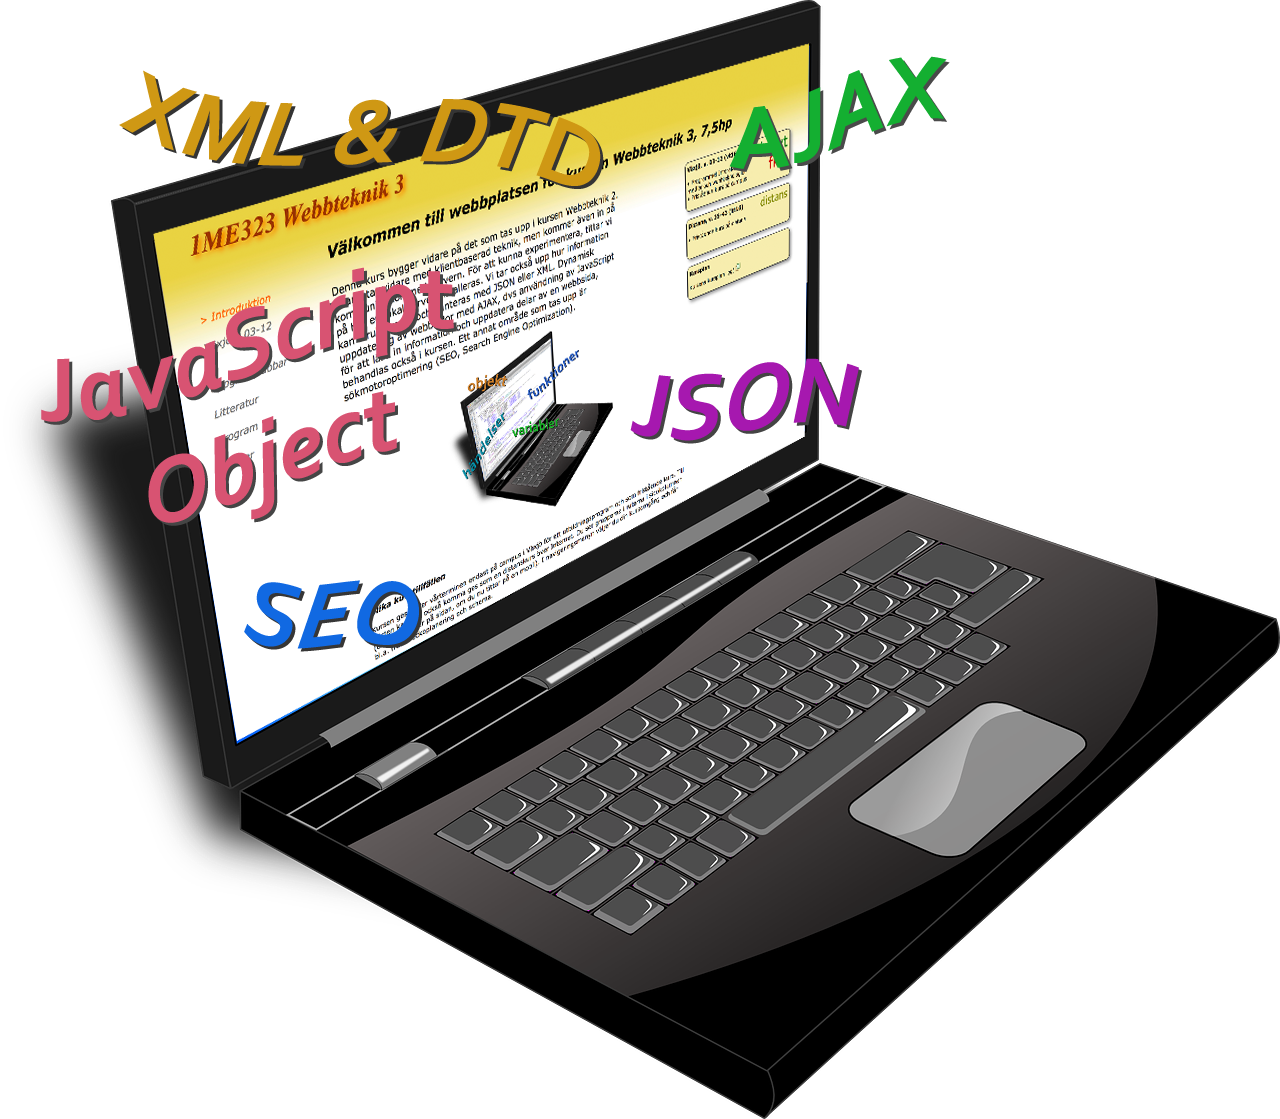 dator och texterna XML & DTD, AJAX, JavaScript object, JSON, SEO